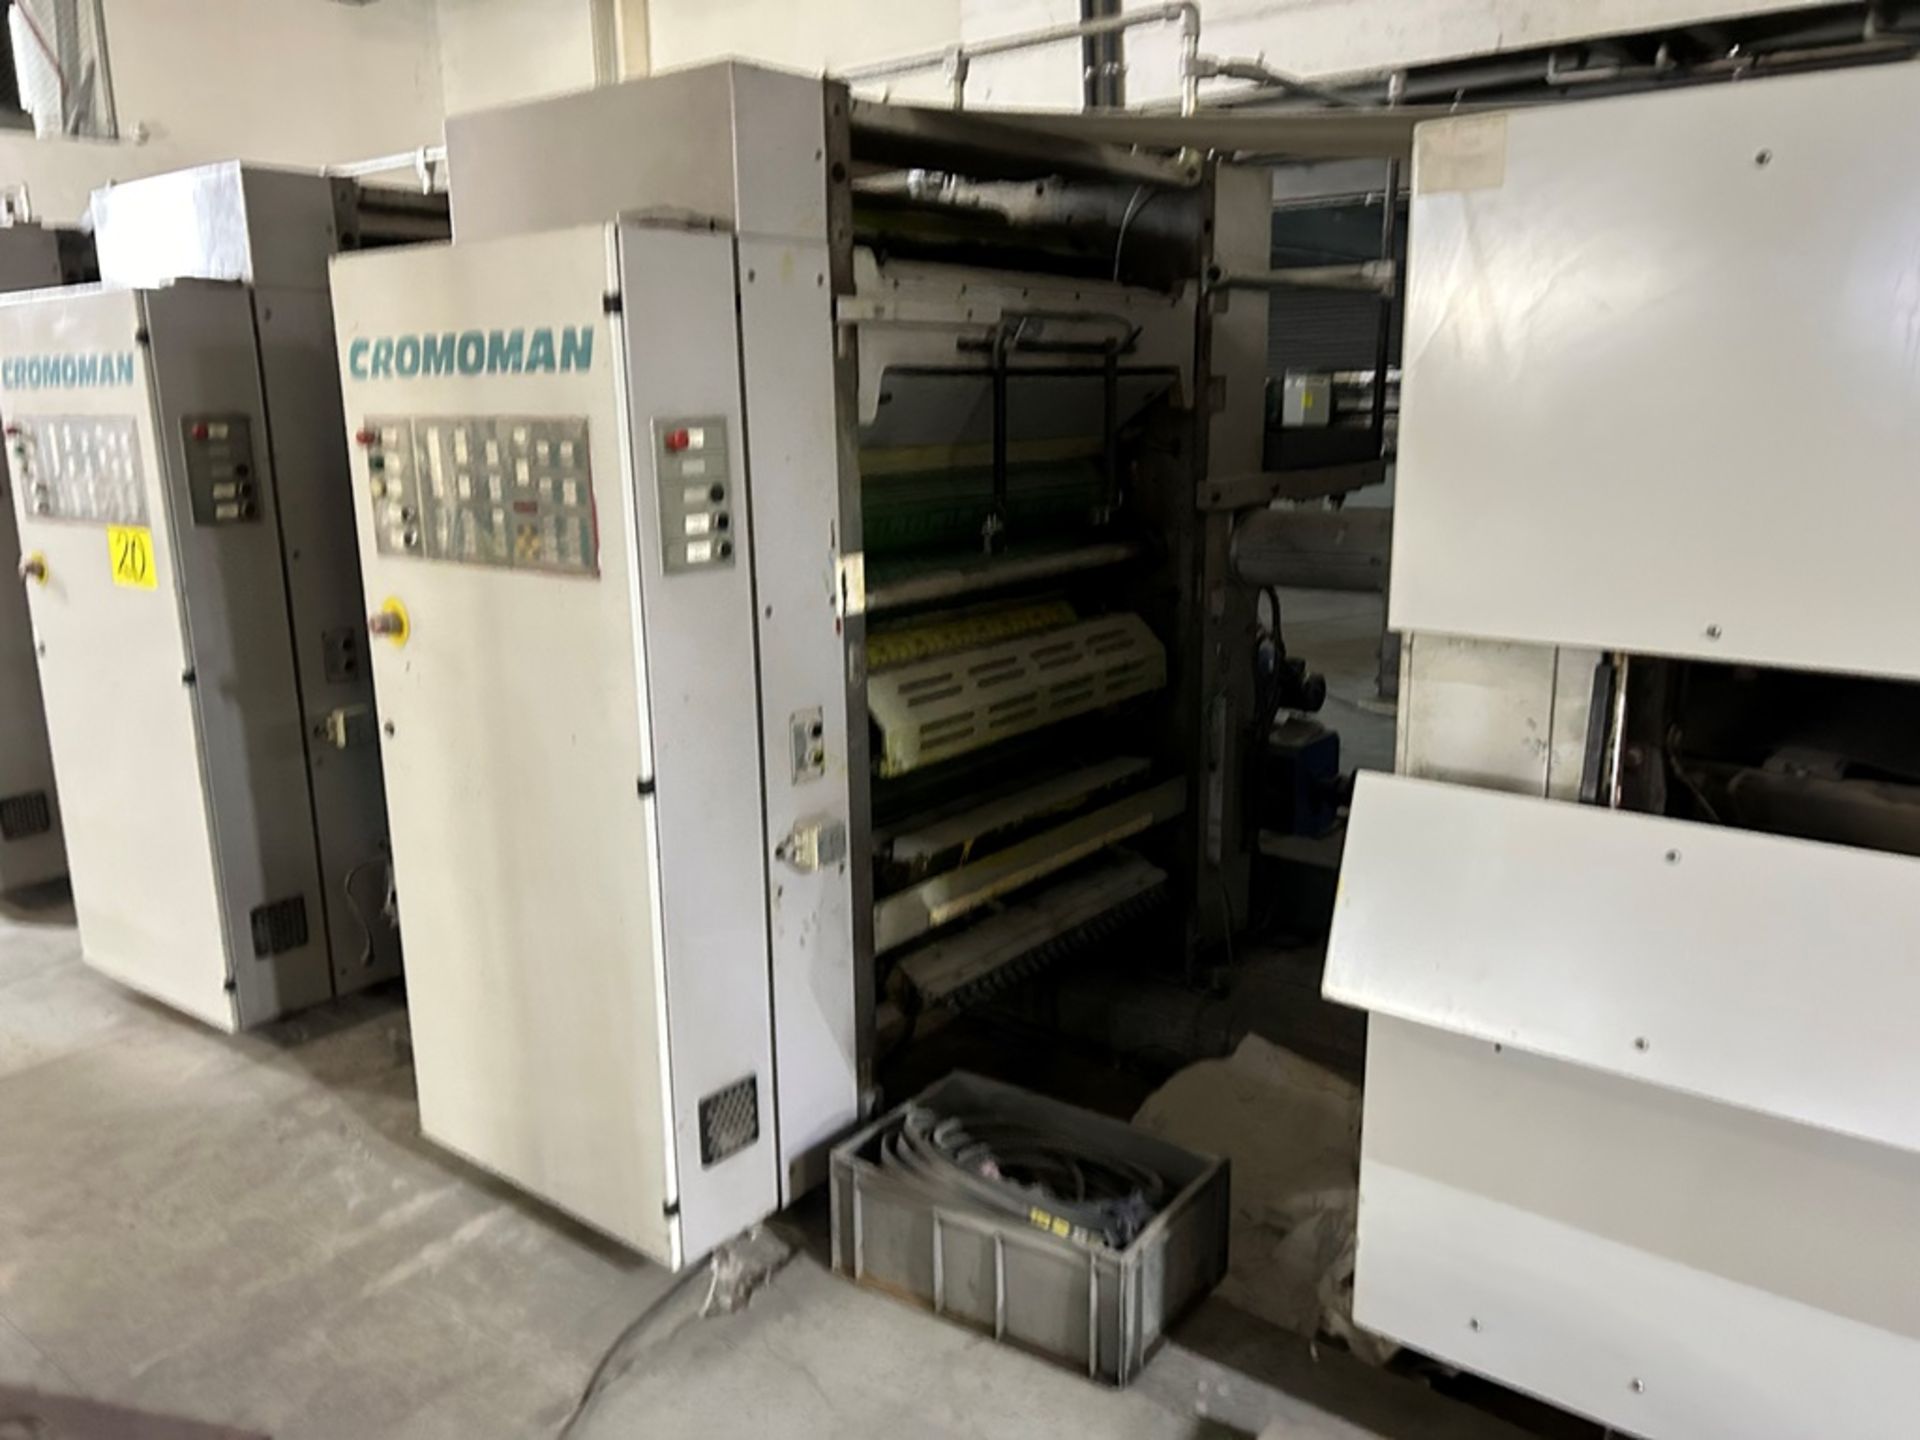 MAN ROLAND rotary printing machine, Model CROMOMAN 45, Serial No. 11163, Year 1999, 400V, Composed - Image 22 of 36